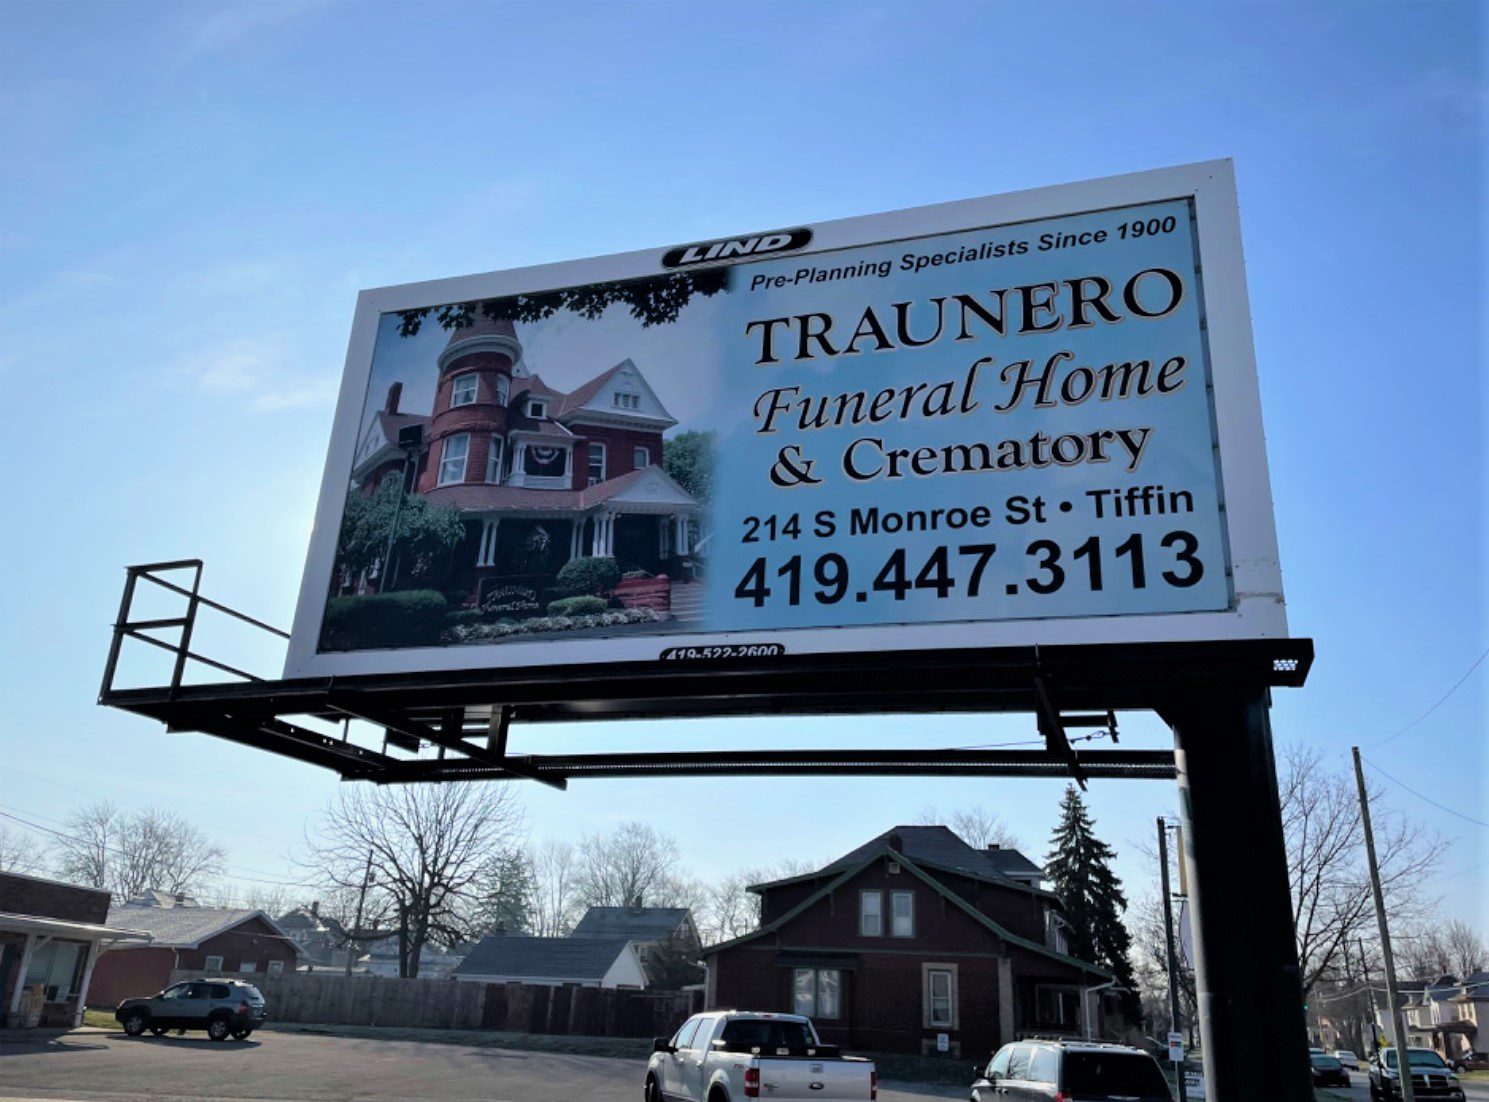 Traunero funeral home billboard, crematory billboard, funeral home billboard